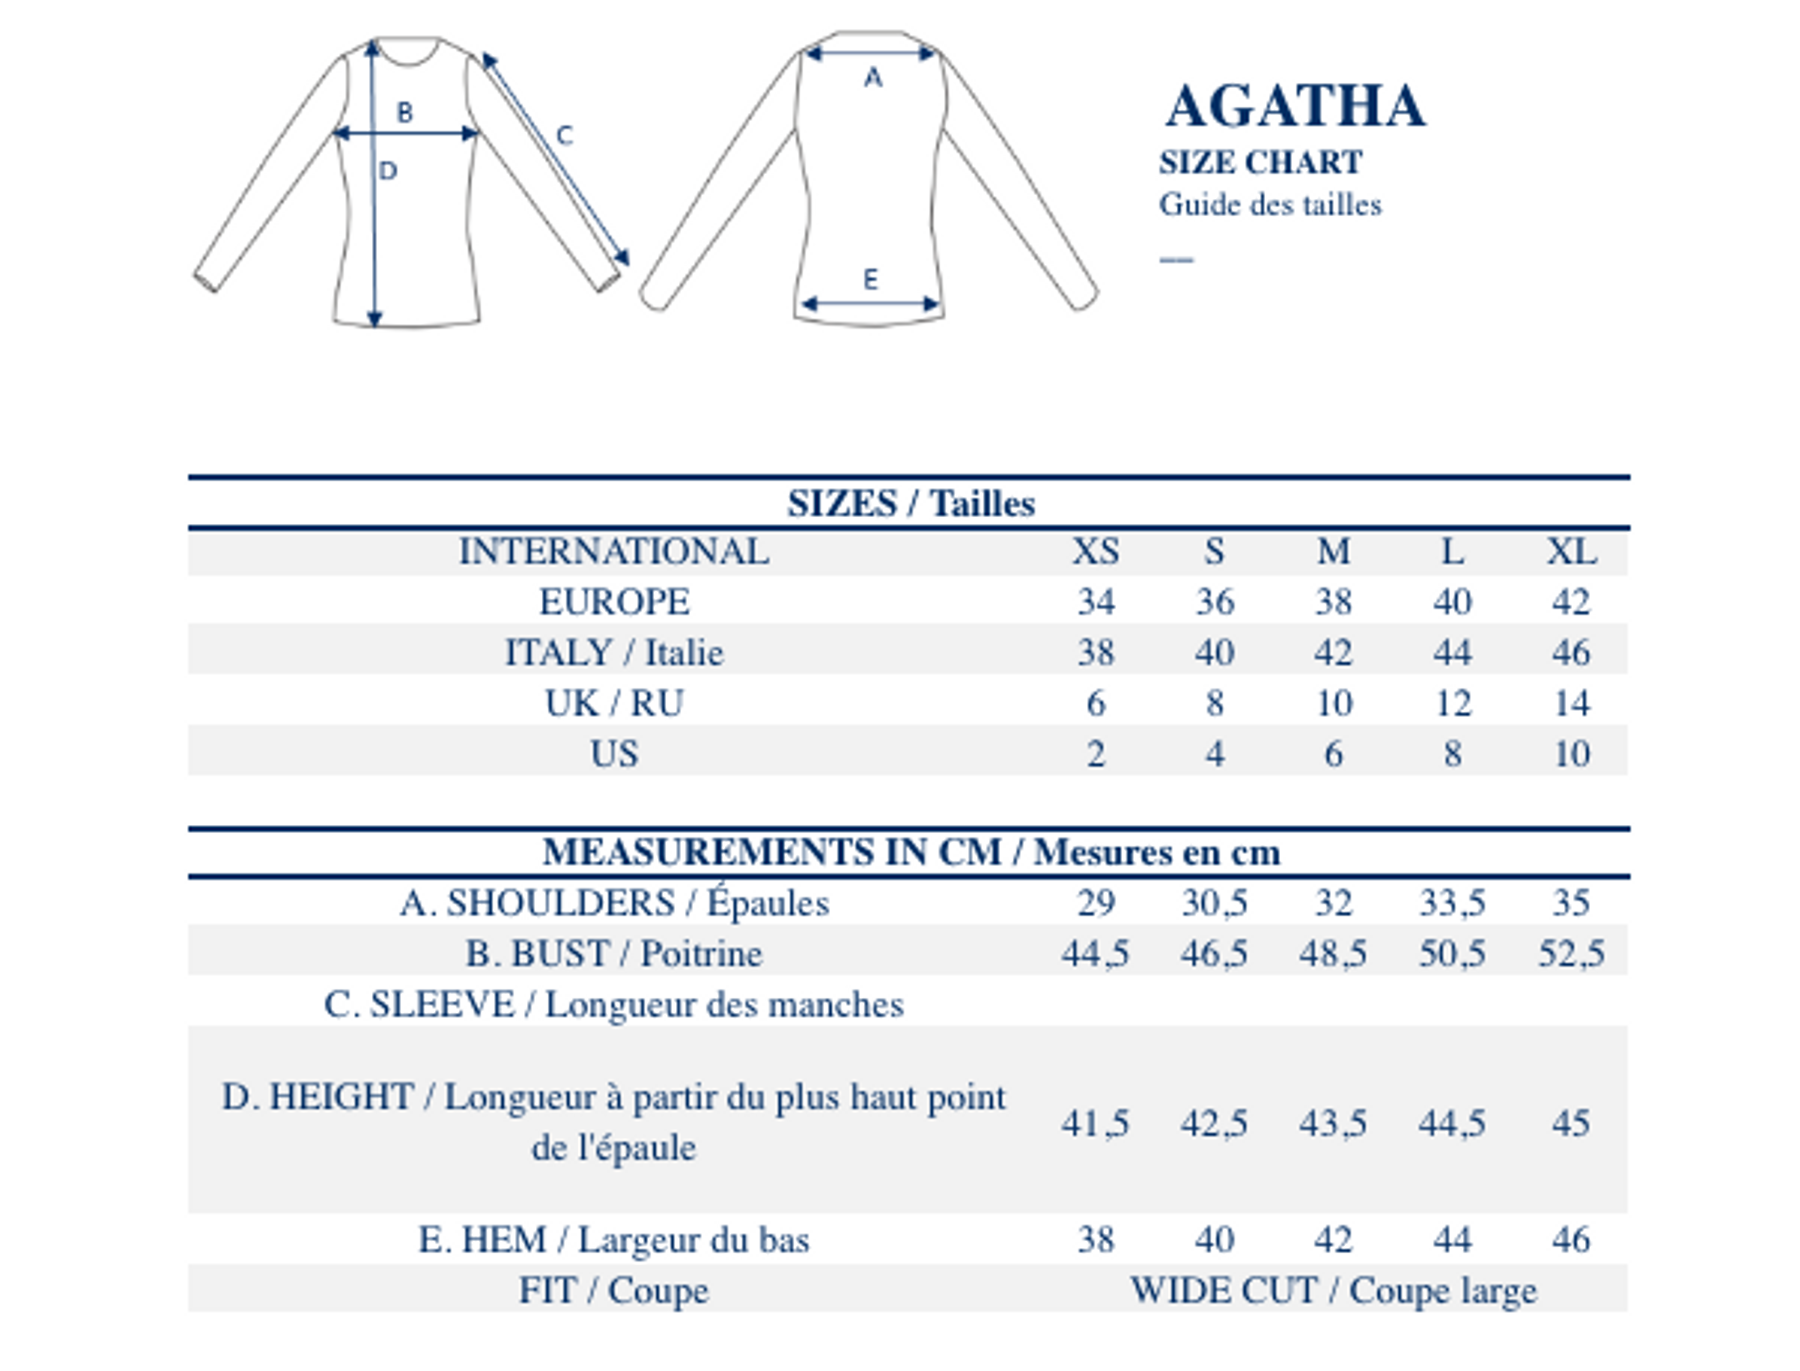 sweater-agatha-violet-sleeveless